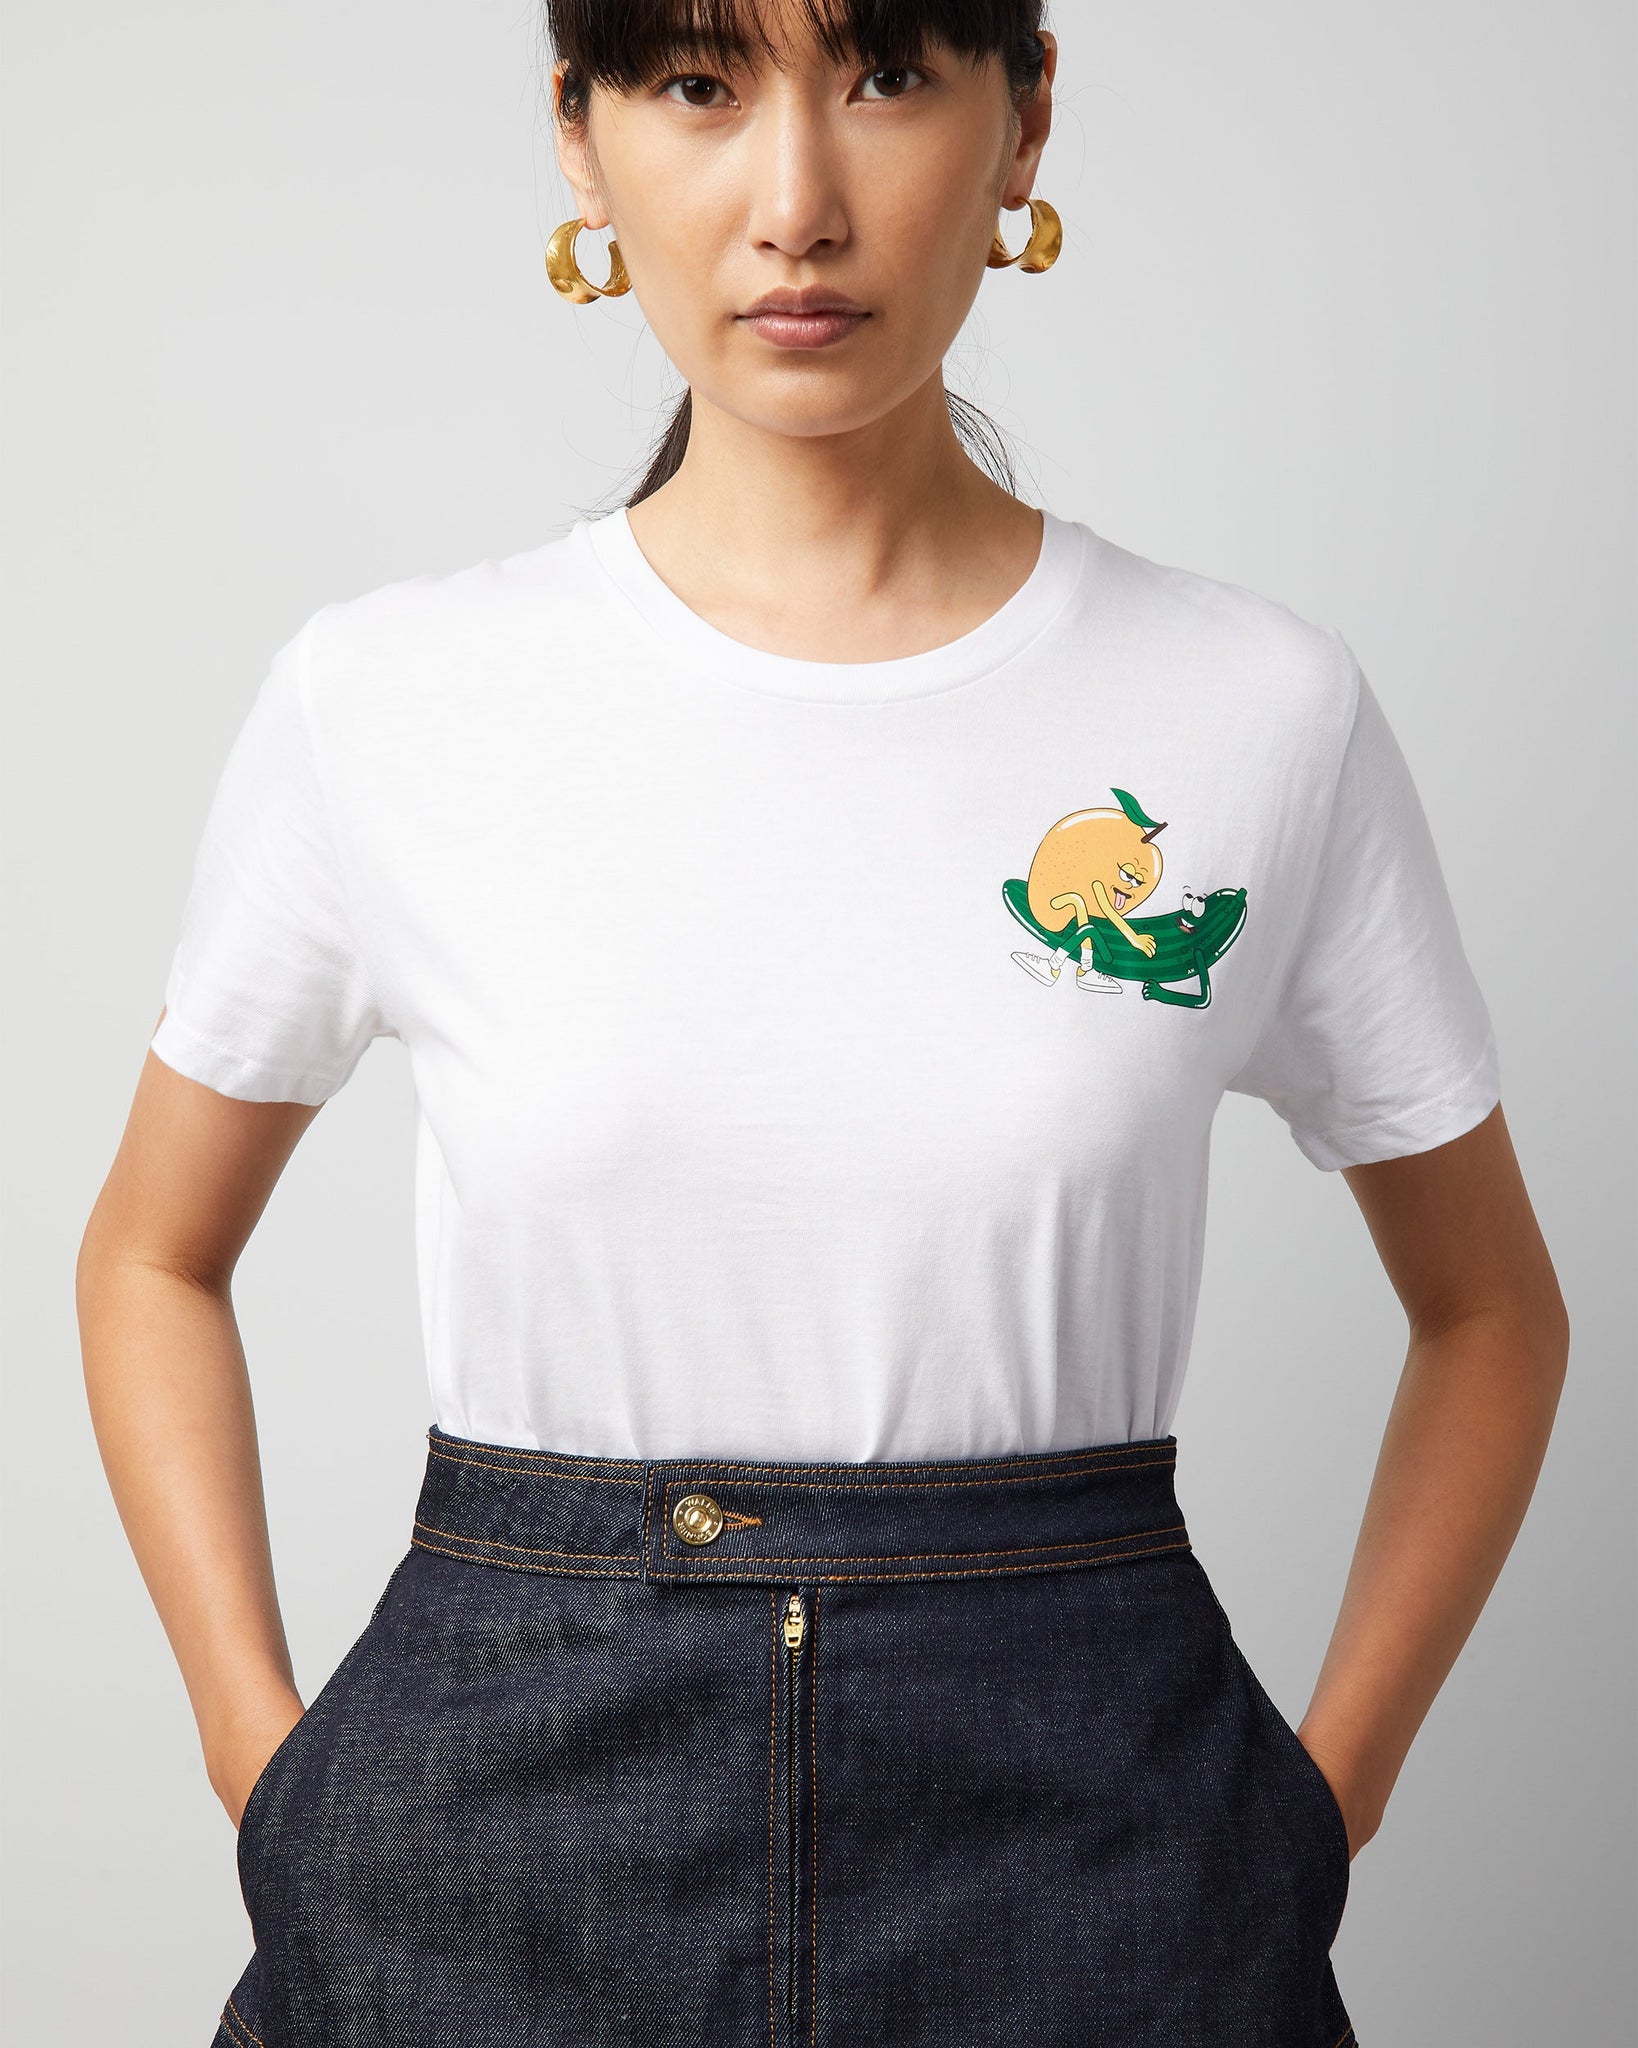 Mango & Cucumber T-Shirt - Small -

                  

                  Anya Hindmarch EU
